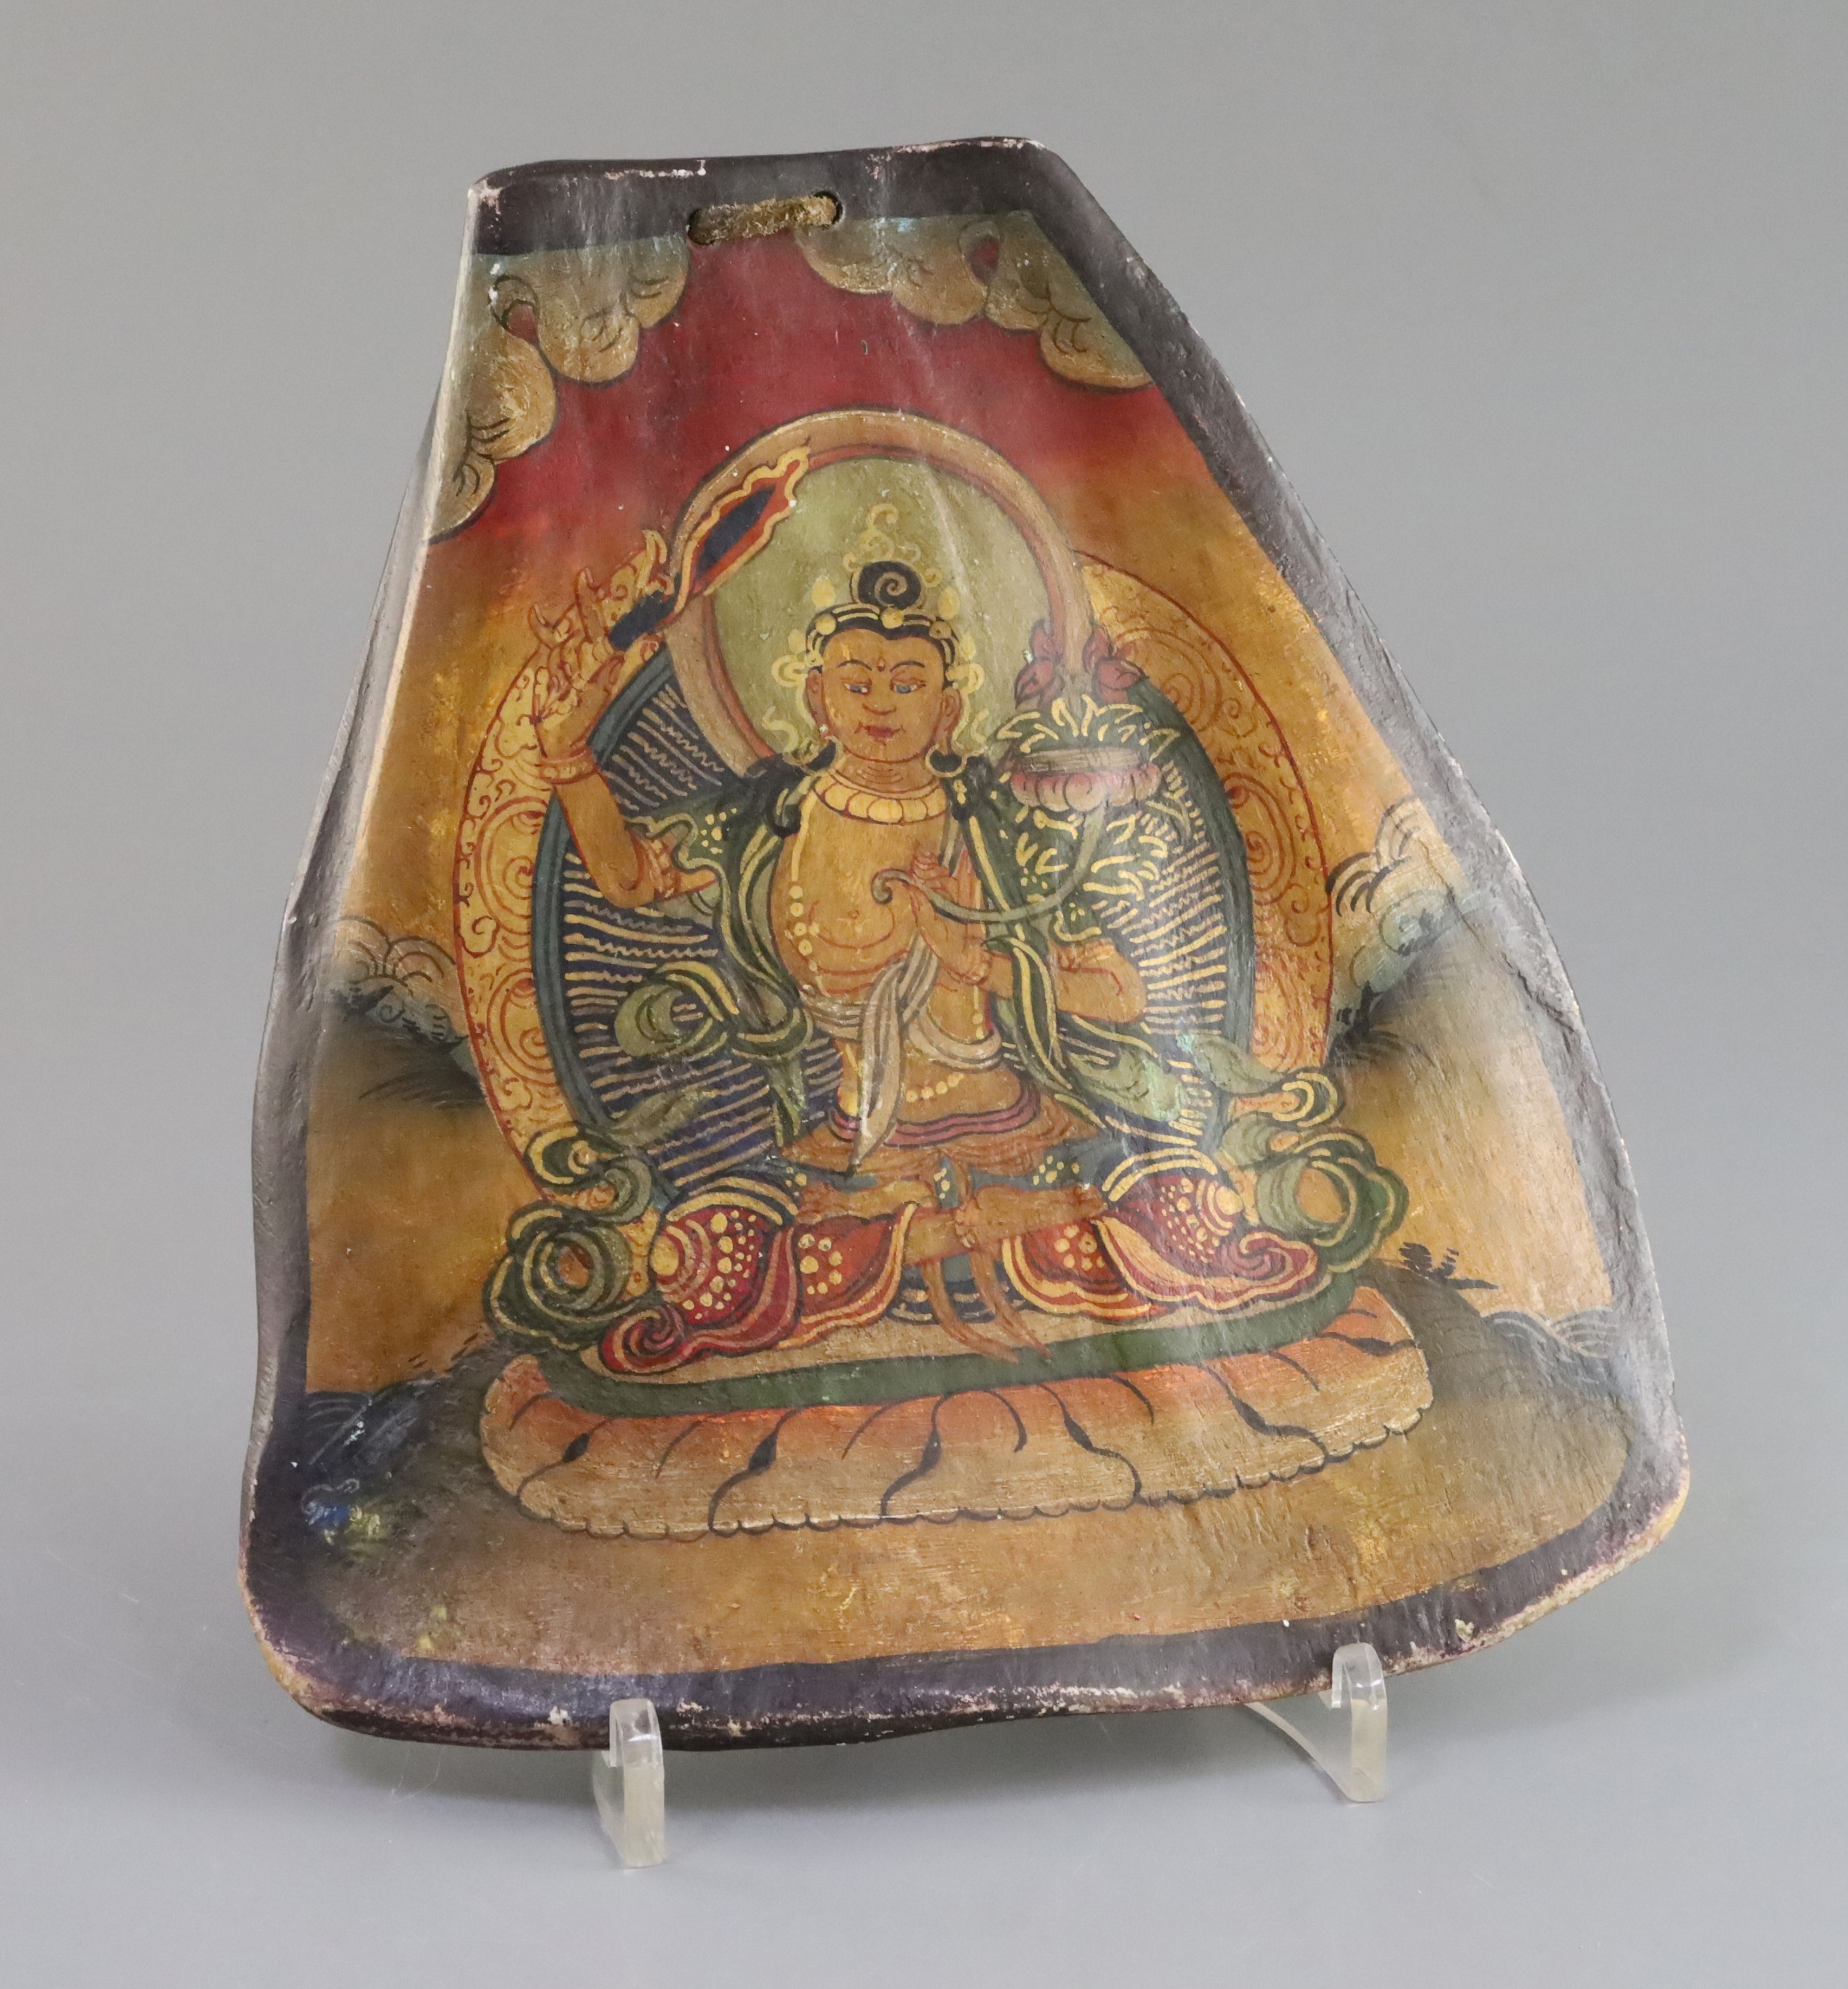 A Tibetan thangka depicting Bodhisattva painted on an ox shoulder bone, late 19th century, H. 20.